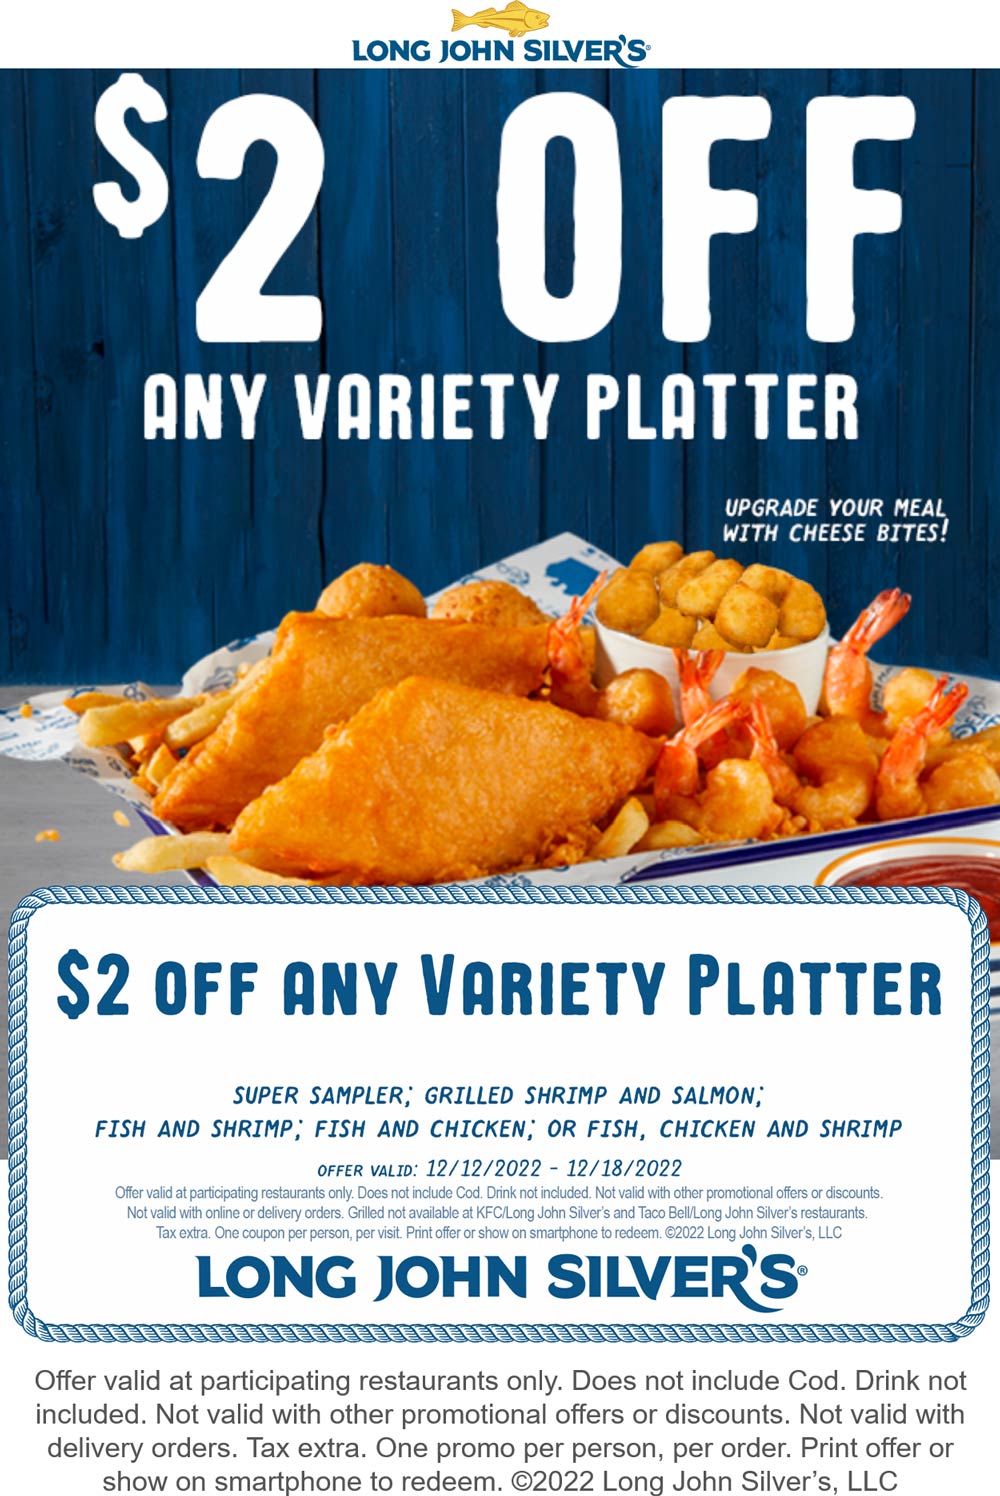 Long John Silvers restaurants Coupon  $2 off any platter meal at Long John Silvers, or online via promo code 2OFFPLATTER #longjohnsilvers 